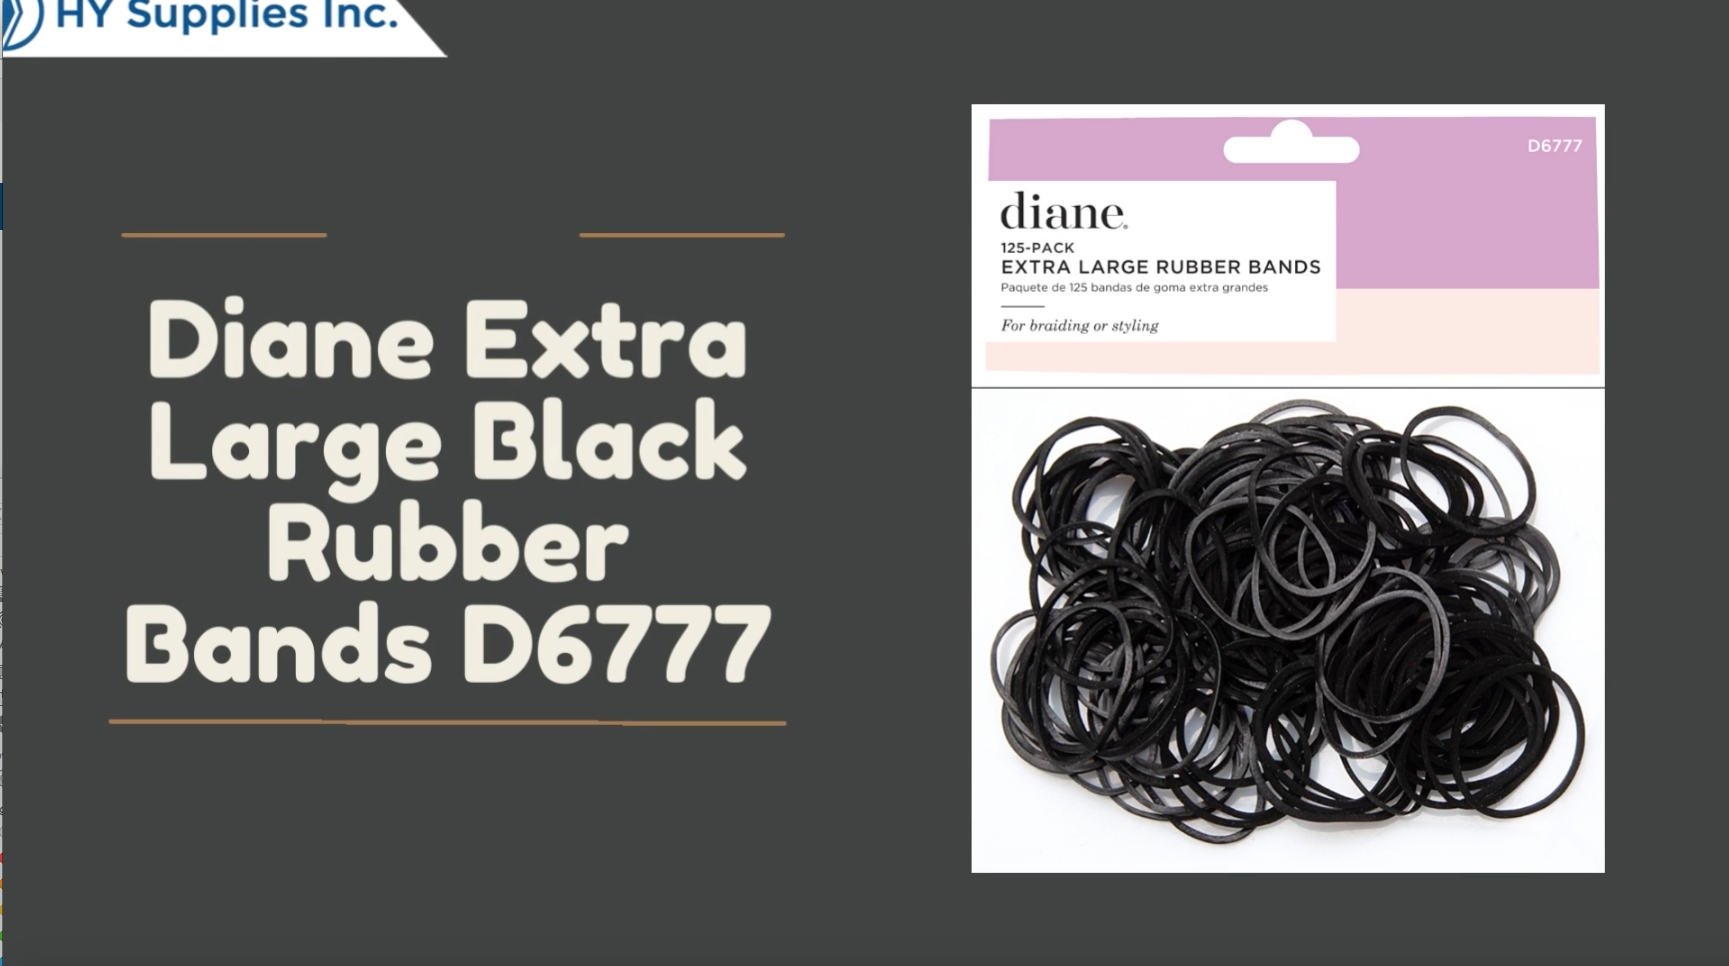 Diane Extra Large Black Rubber Bands D6777